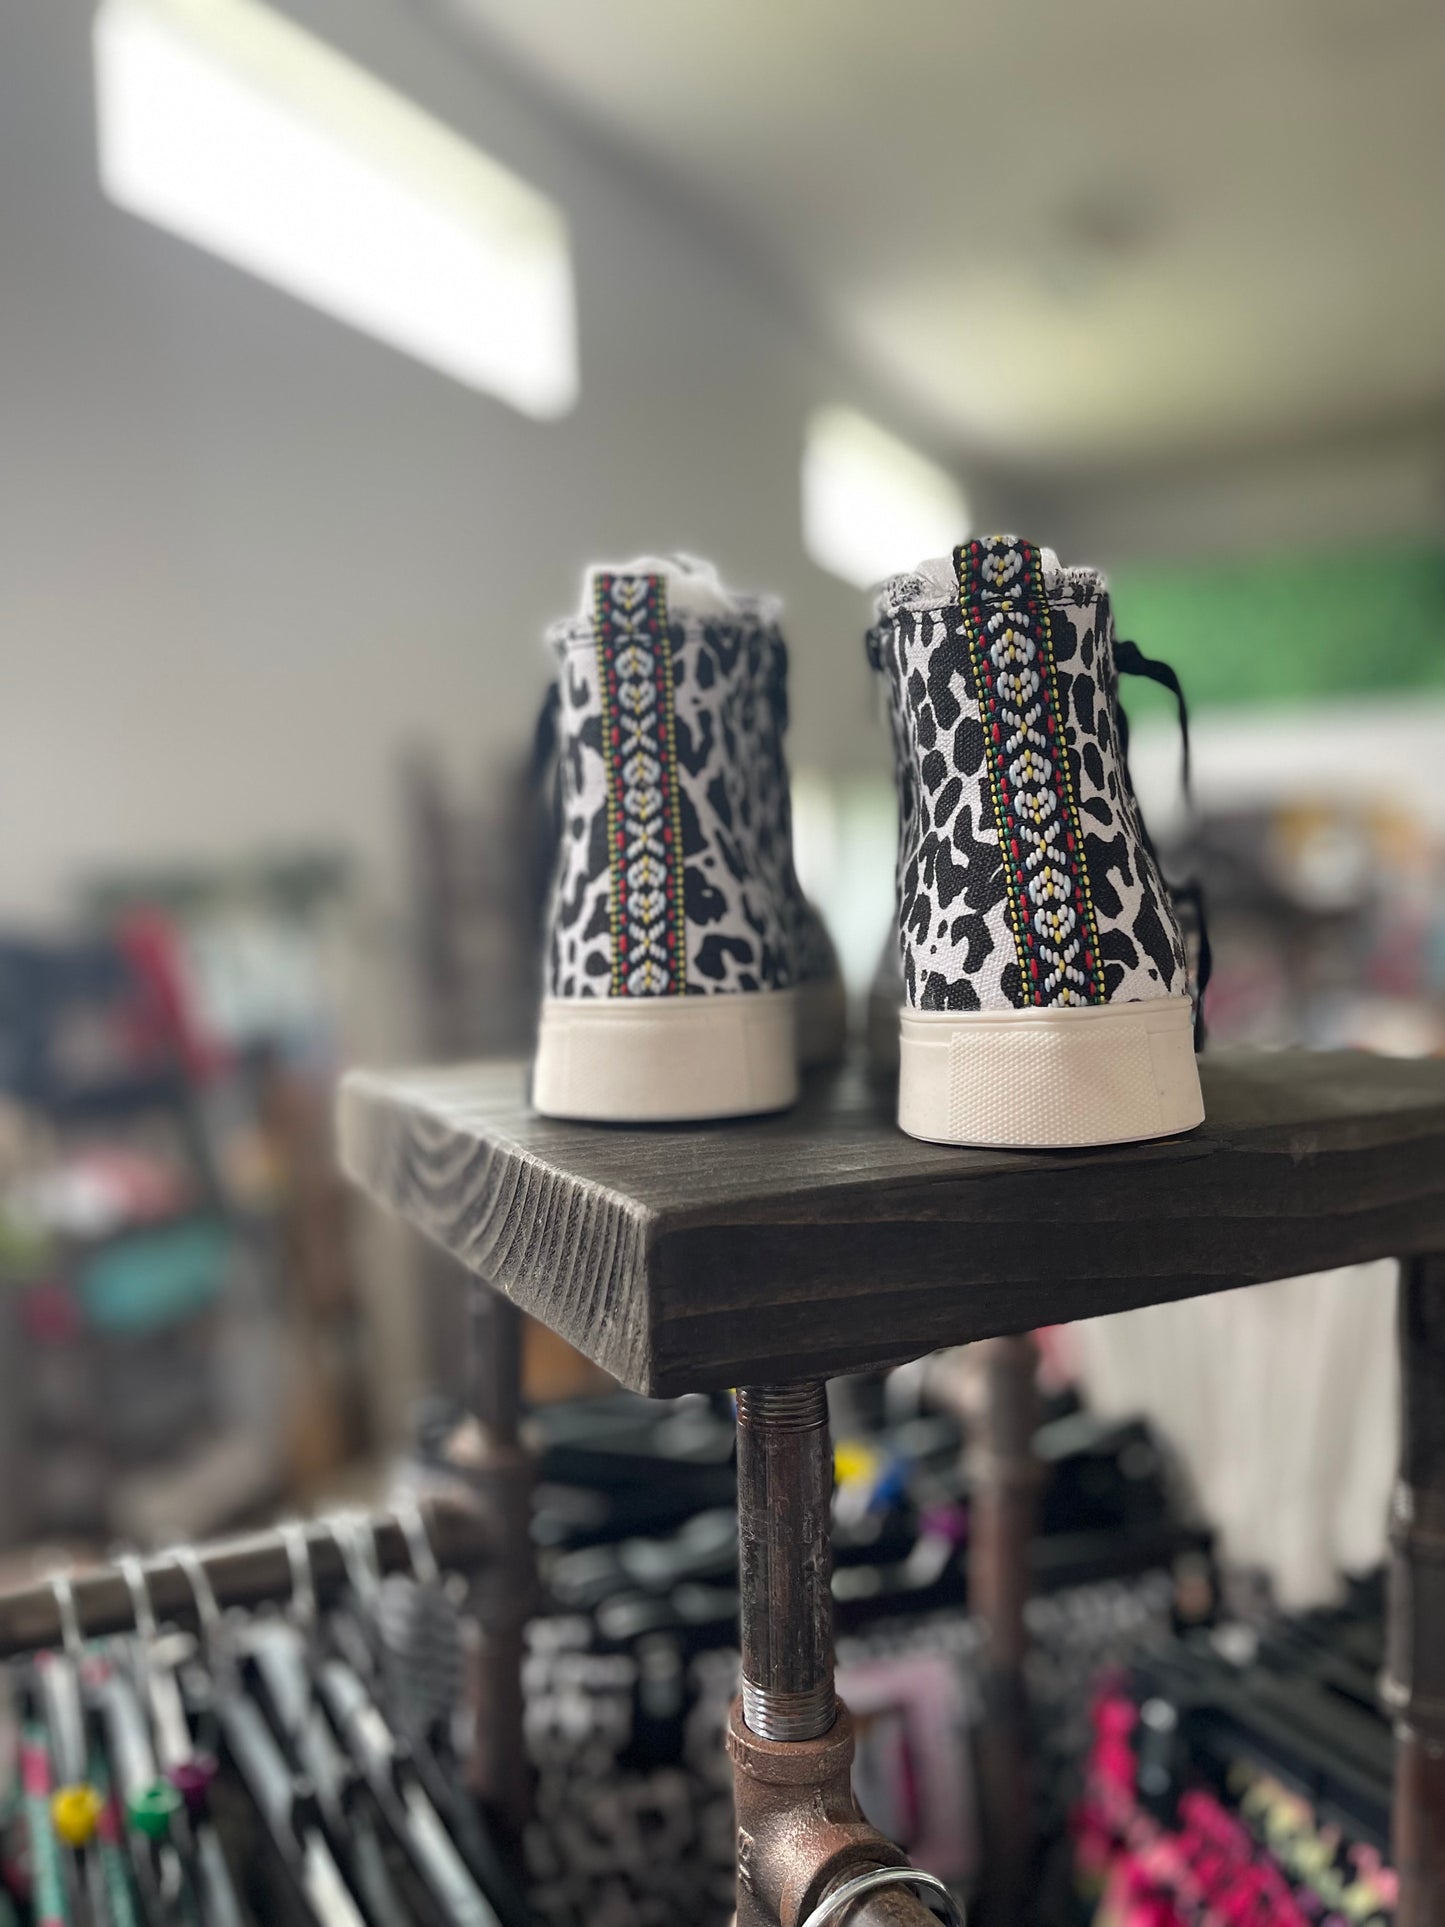 Trinn Snow Leopard Shoes